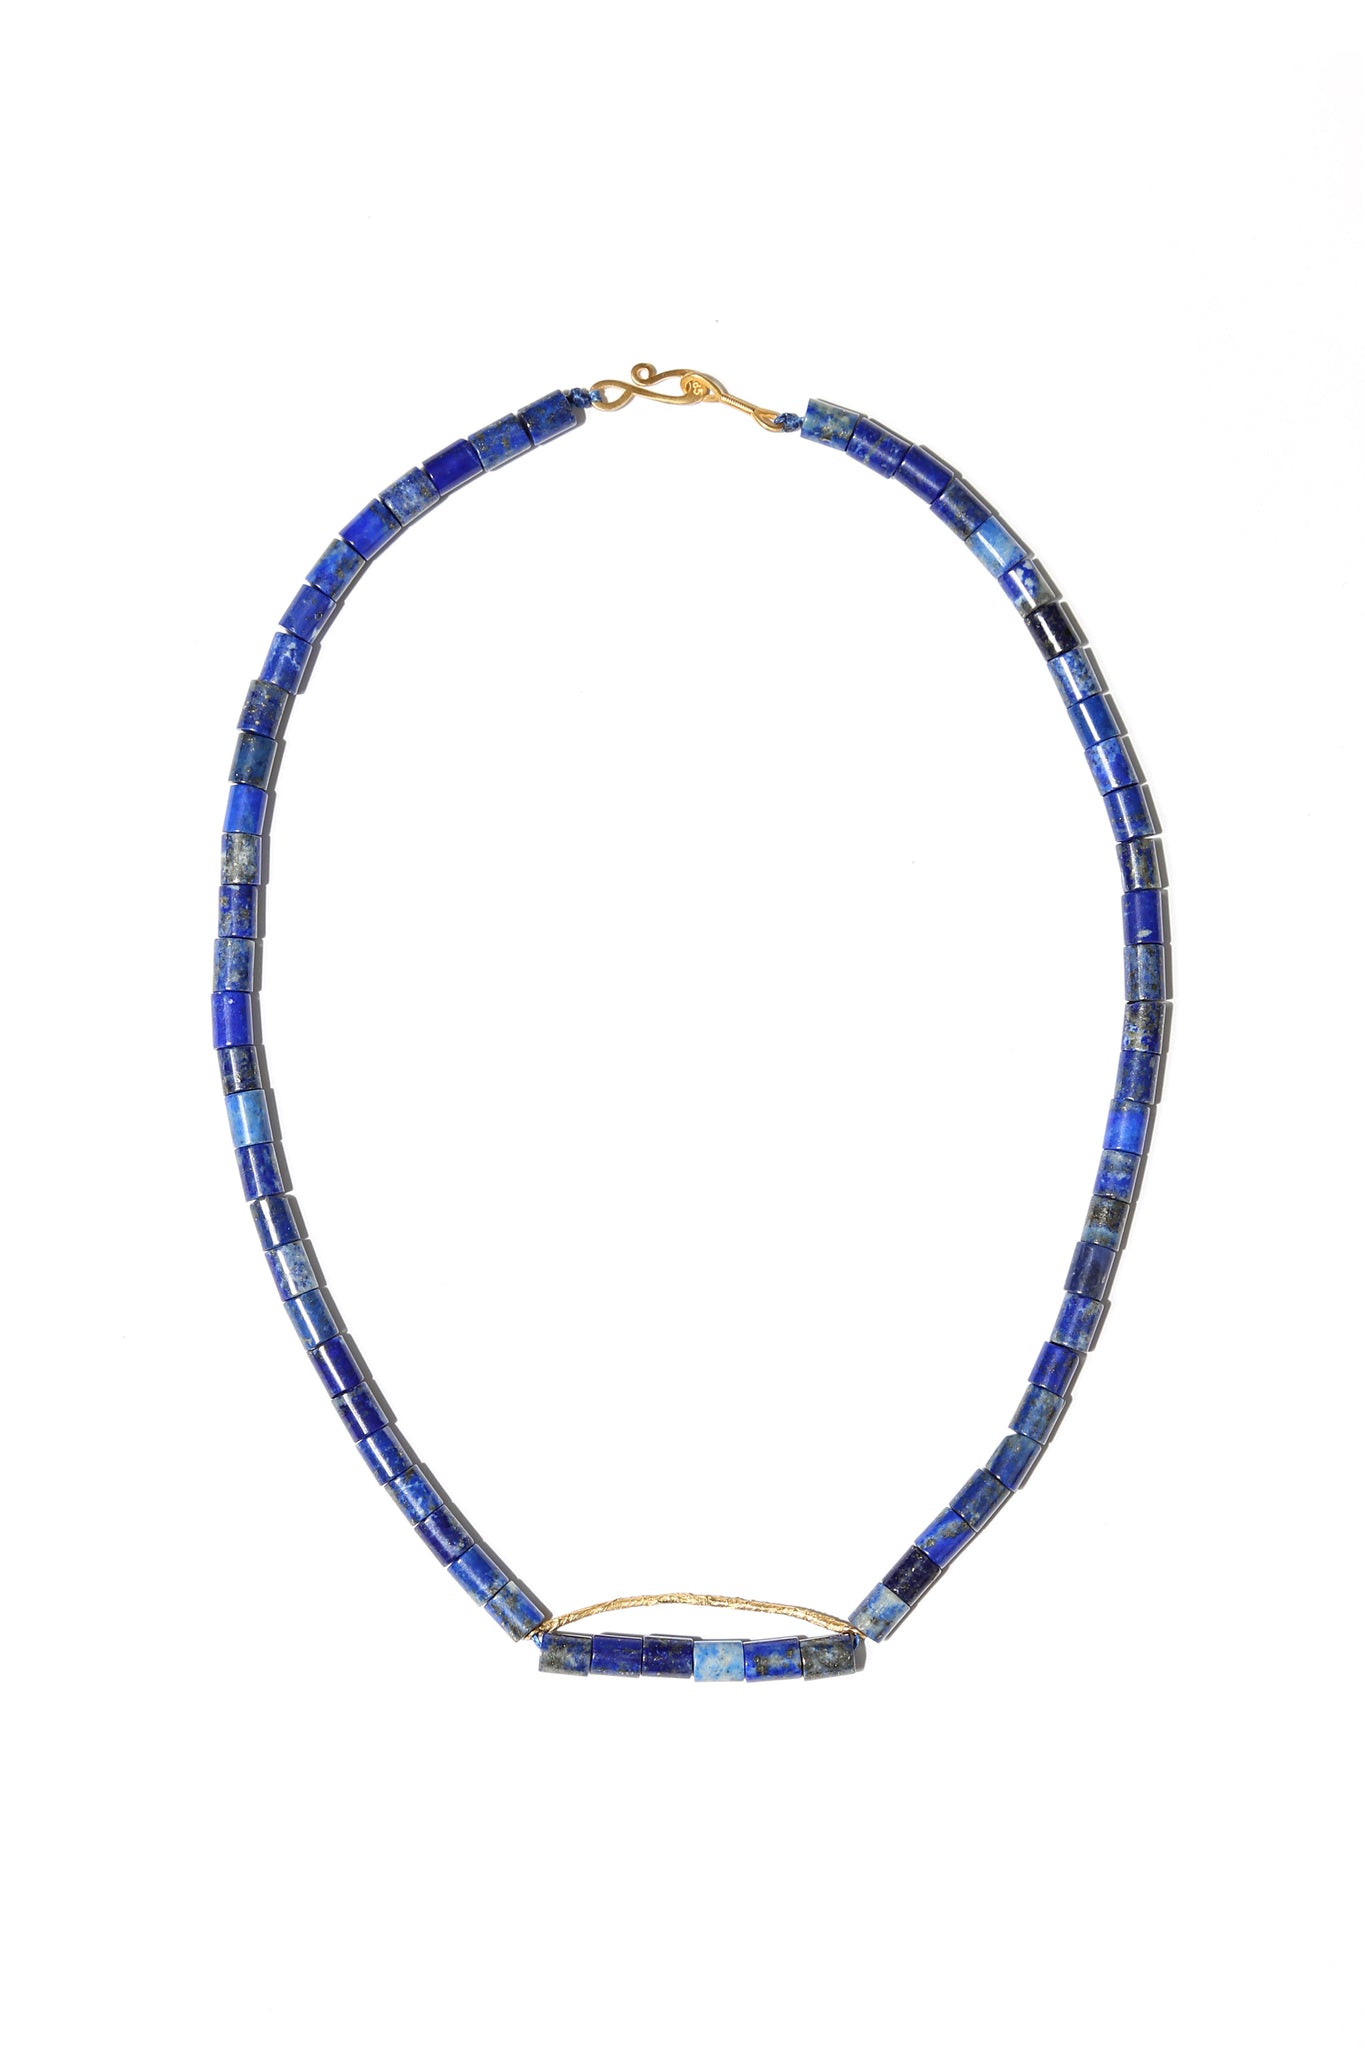 Lapis Lazuli Necklace III